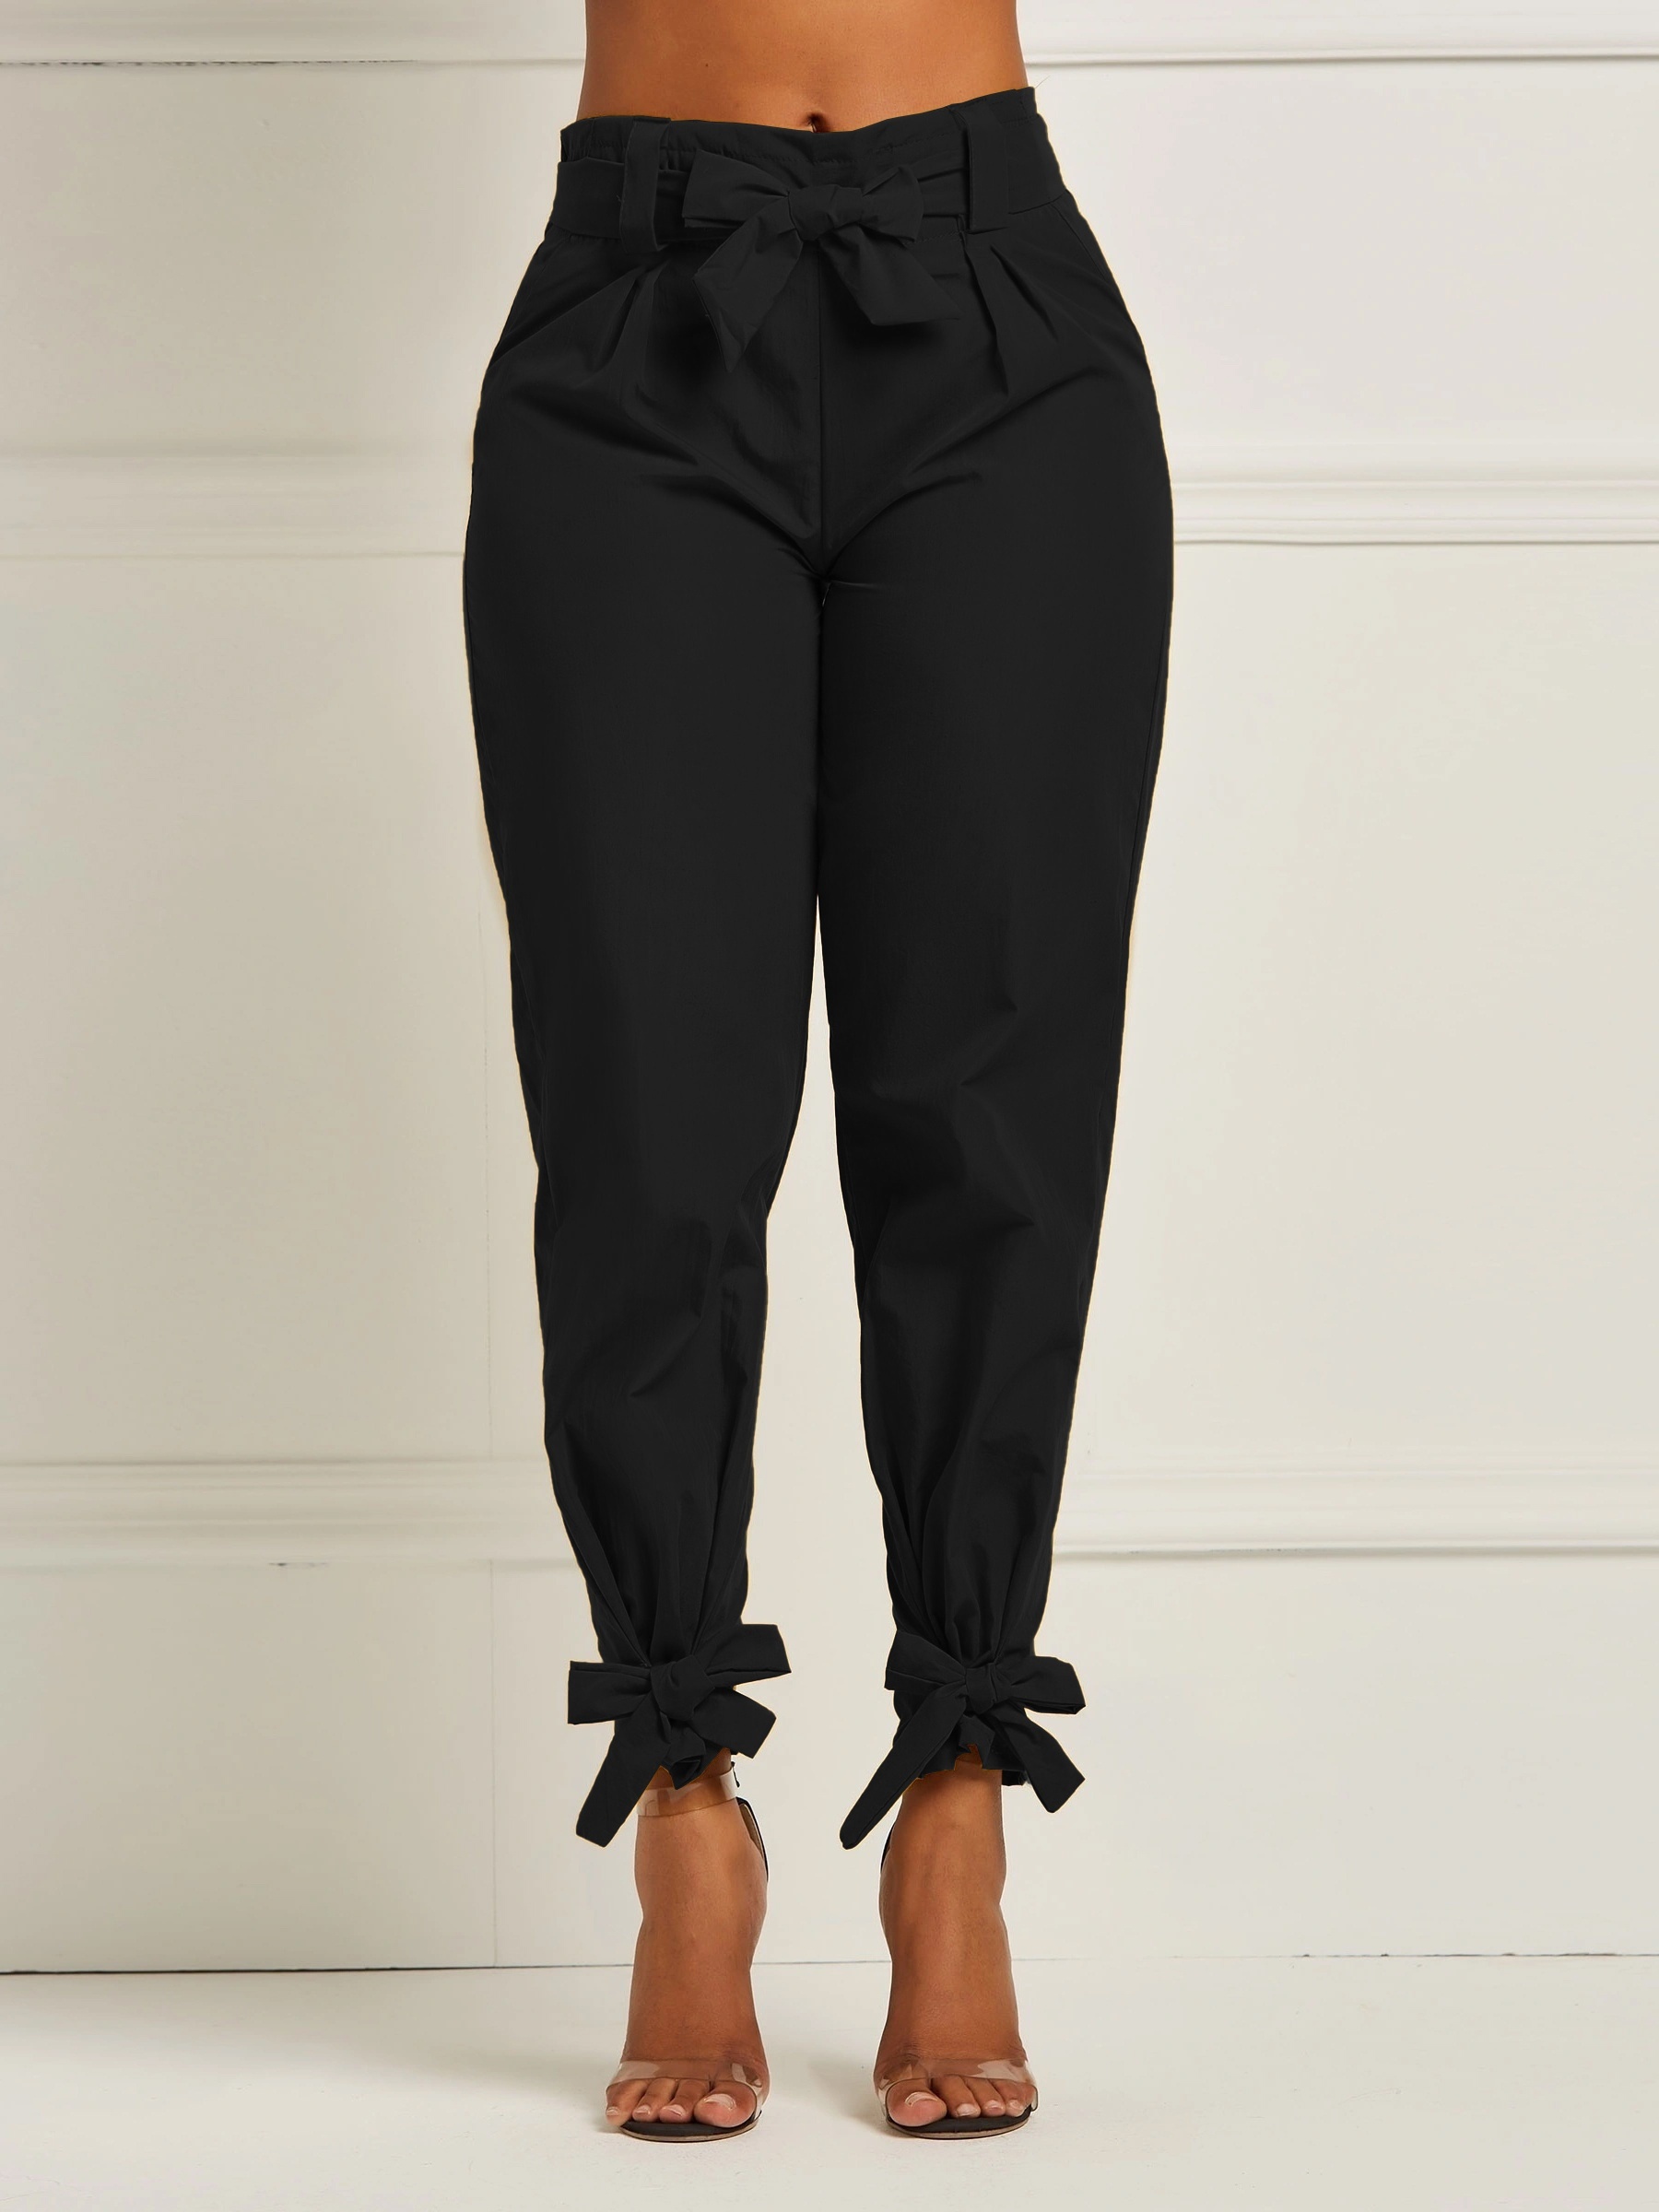 Bowknot Plain Women's Pencil Pants#pants#fashion#womens pants